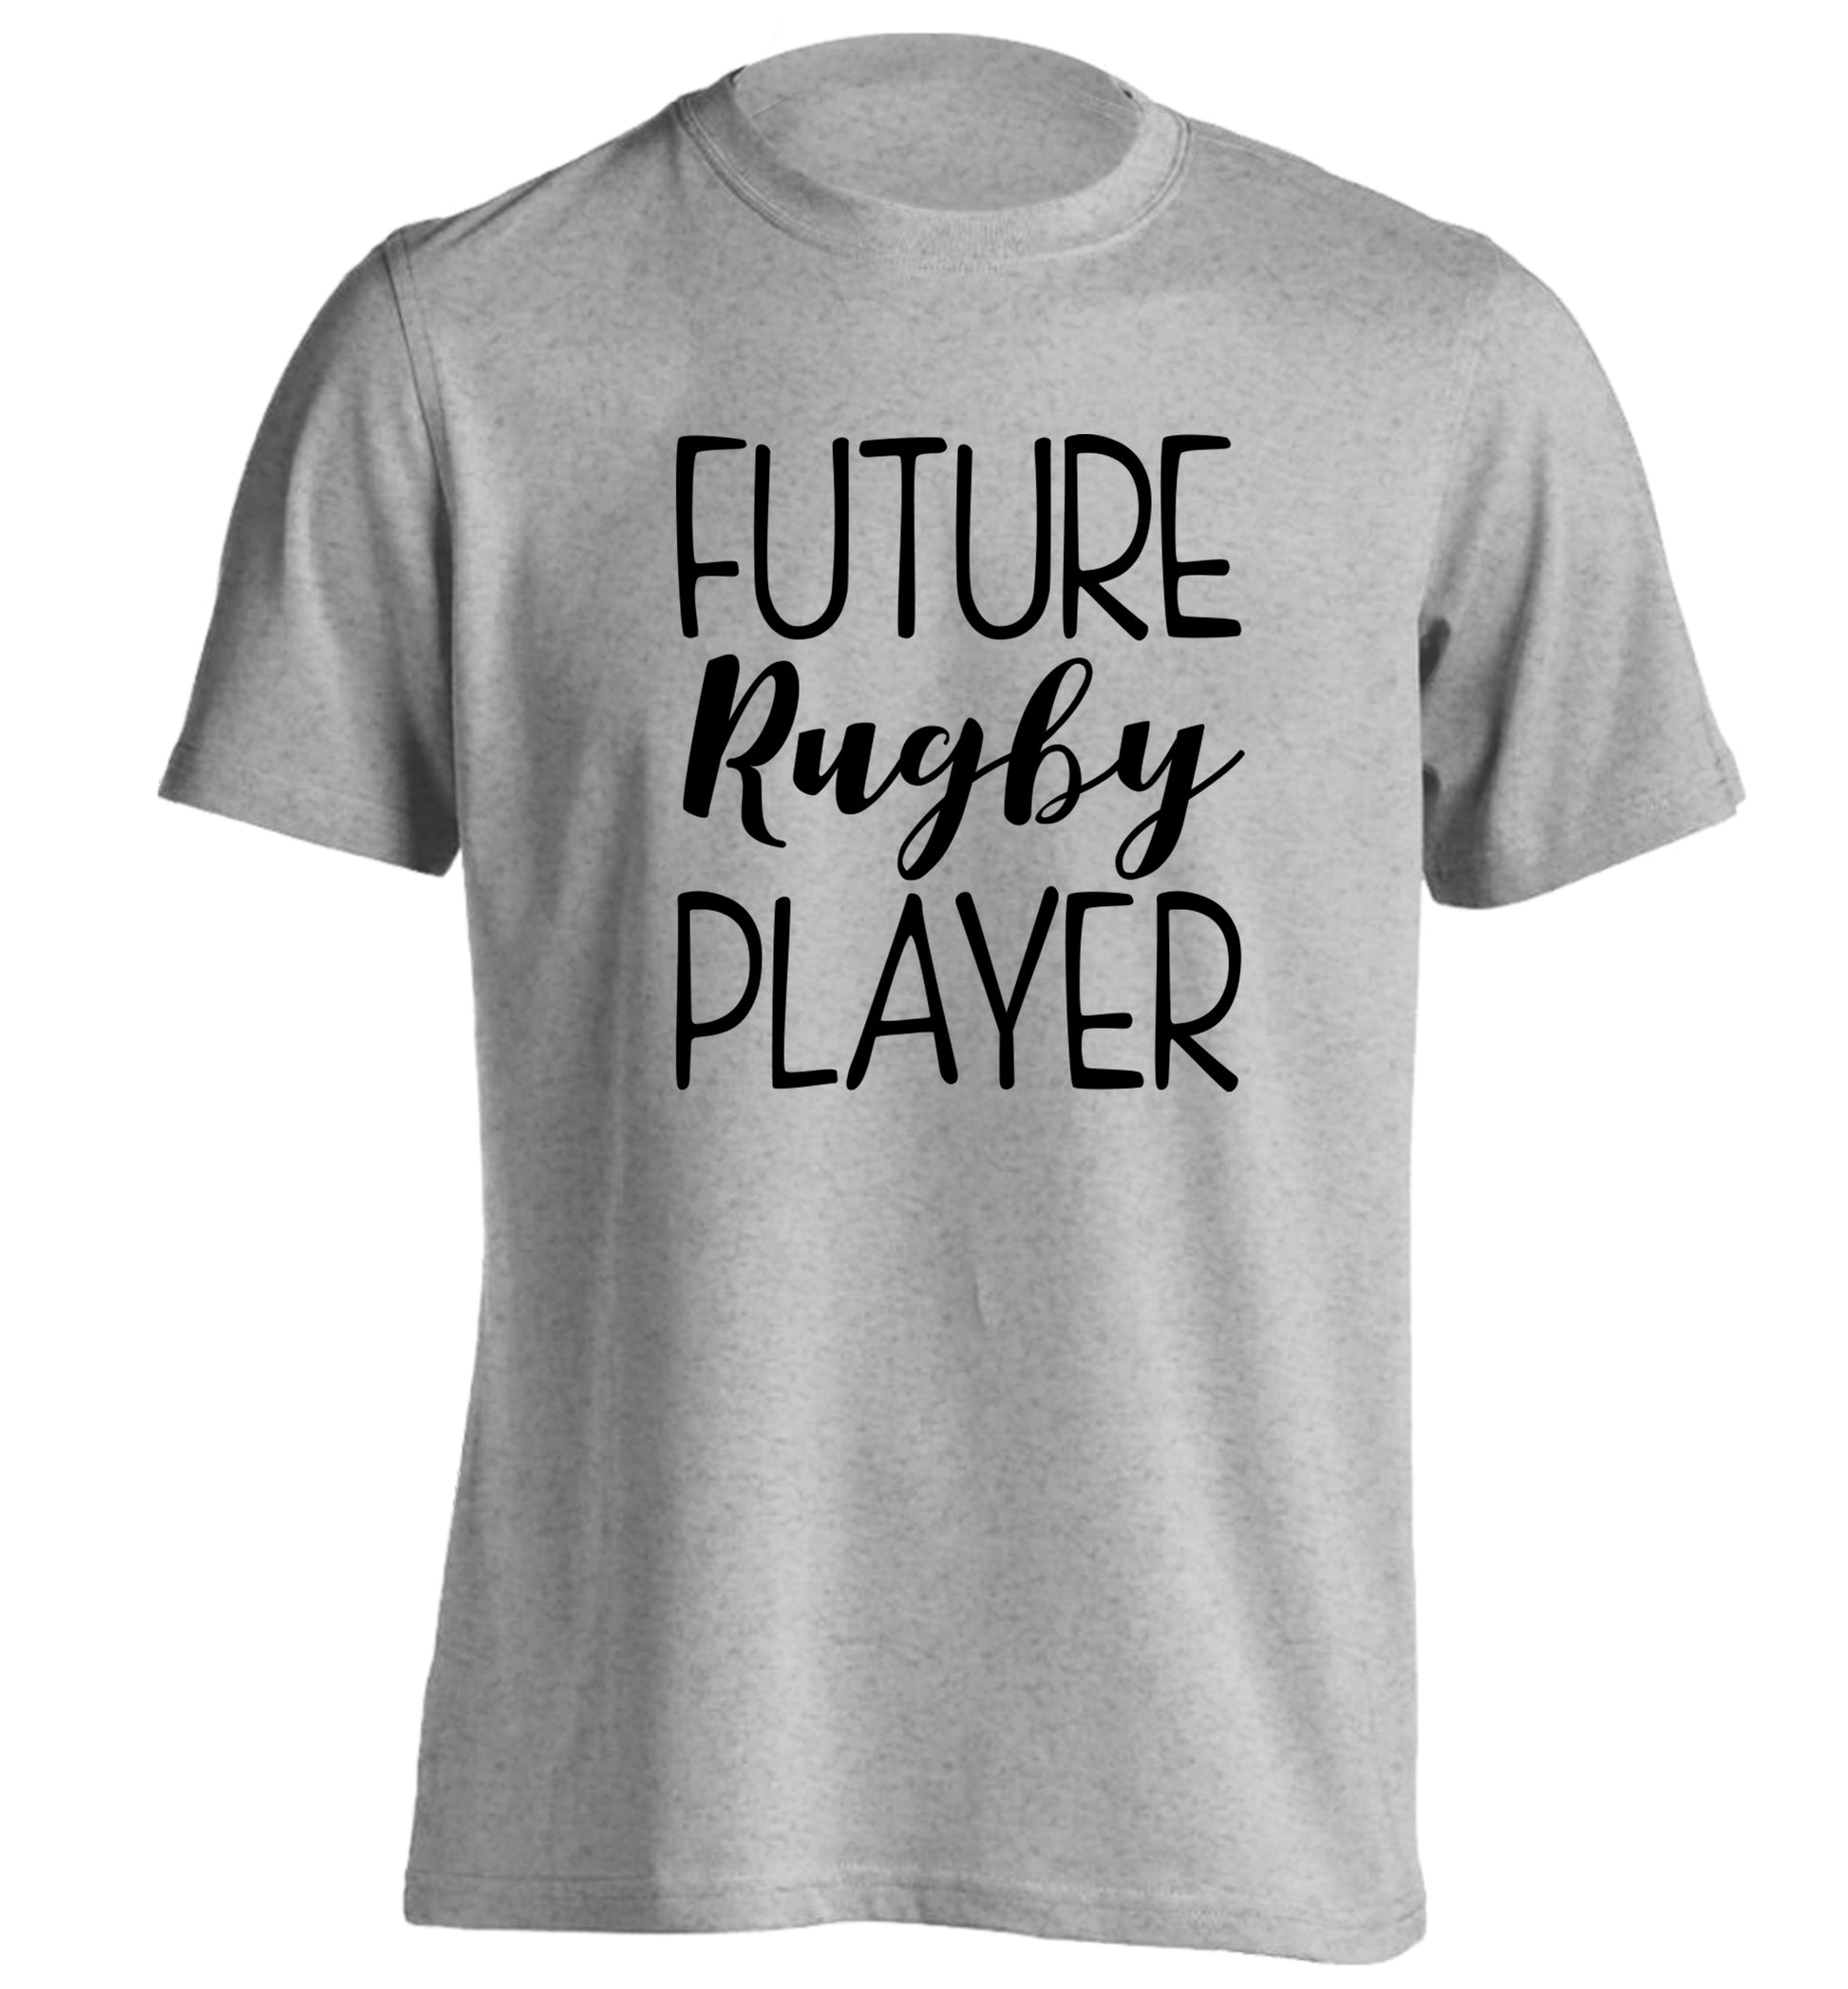 Future rugby player adults unisex grey Tshirt 2XL